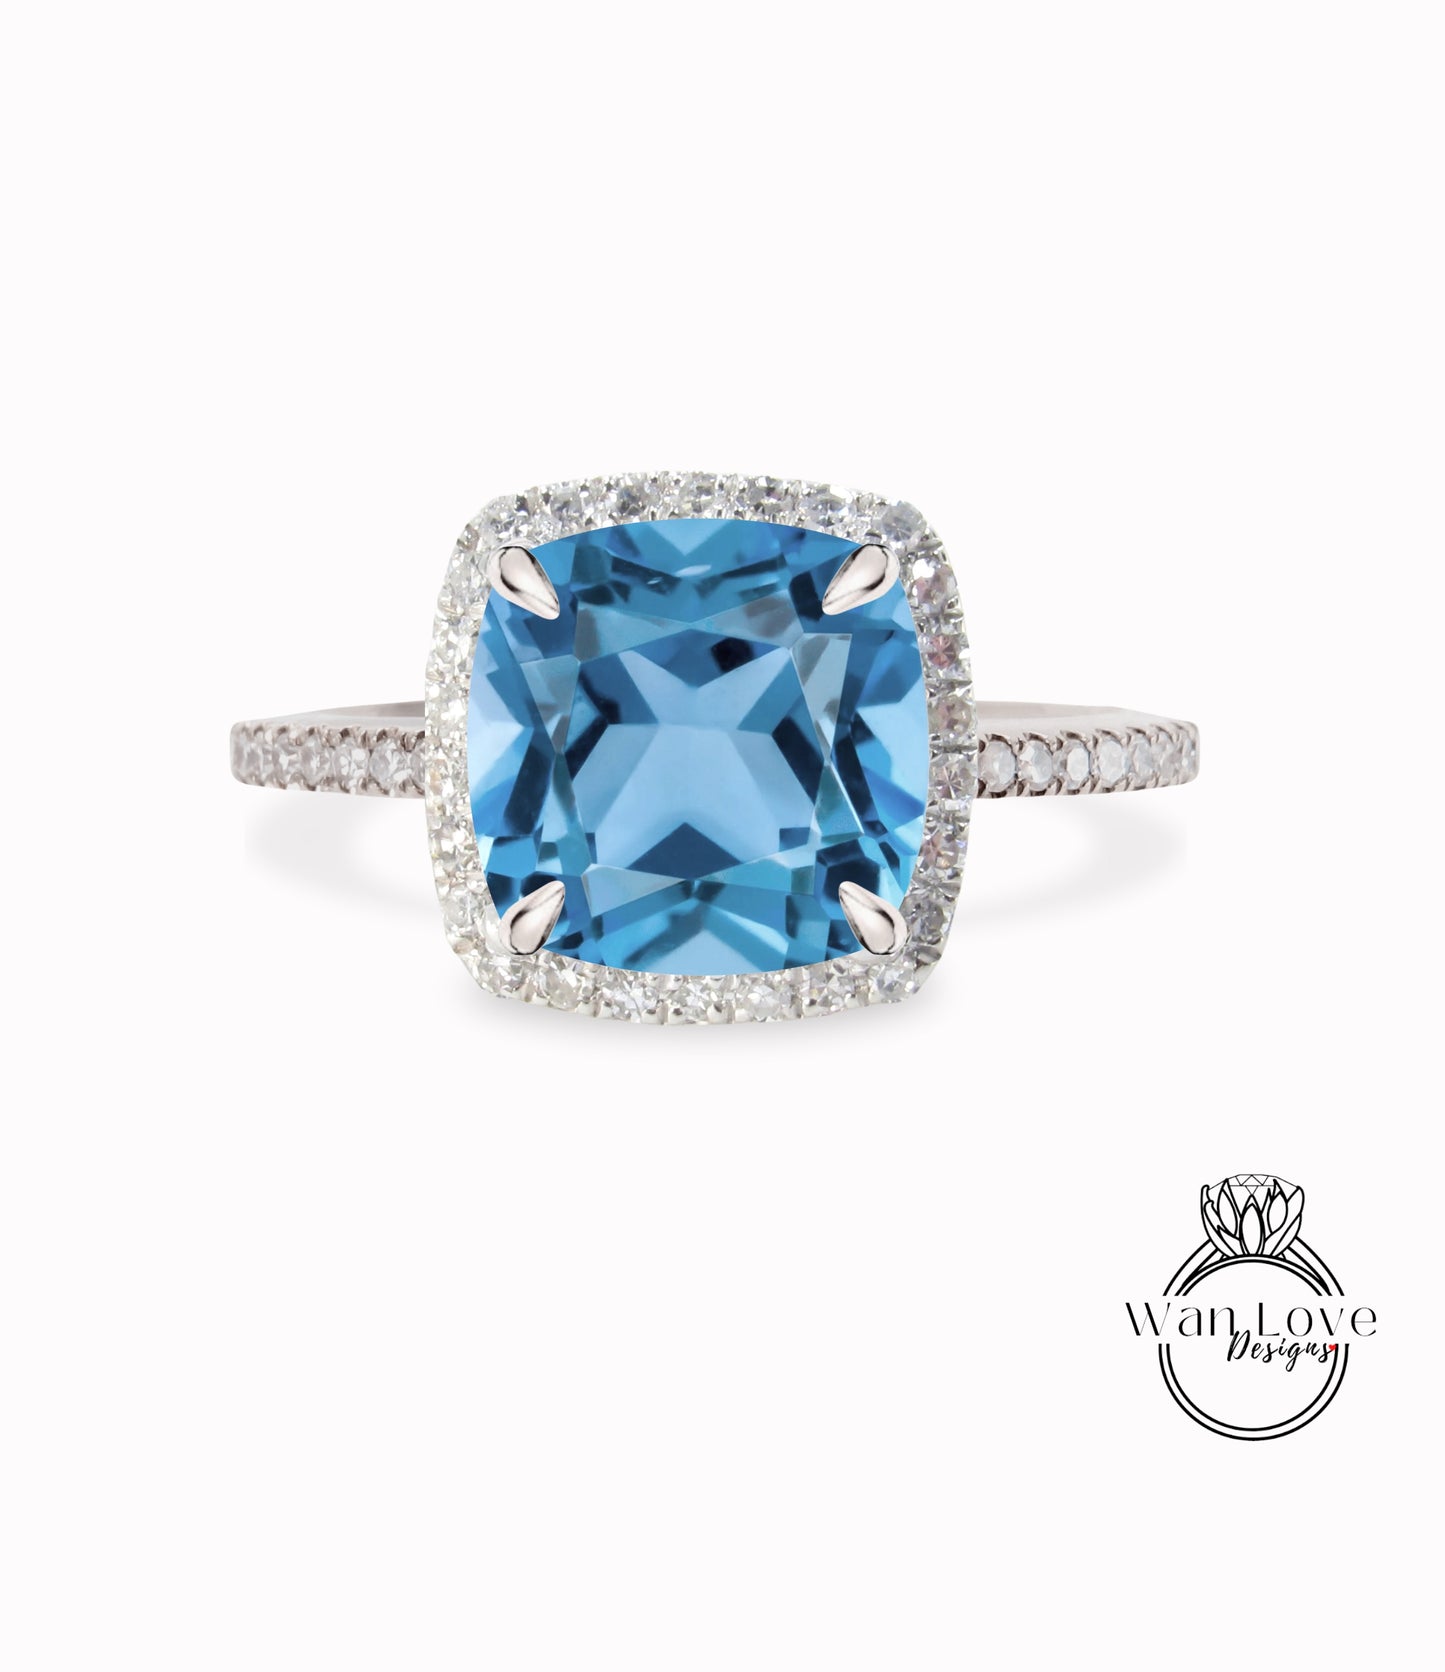 Cushion cut Aquamarine Blue Spinel engagement ring vintage Art deco rose gold diamond halo ring birthstone wedding Anniversary promise ring